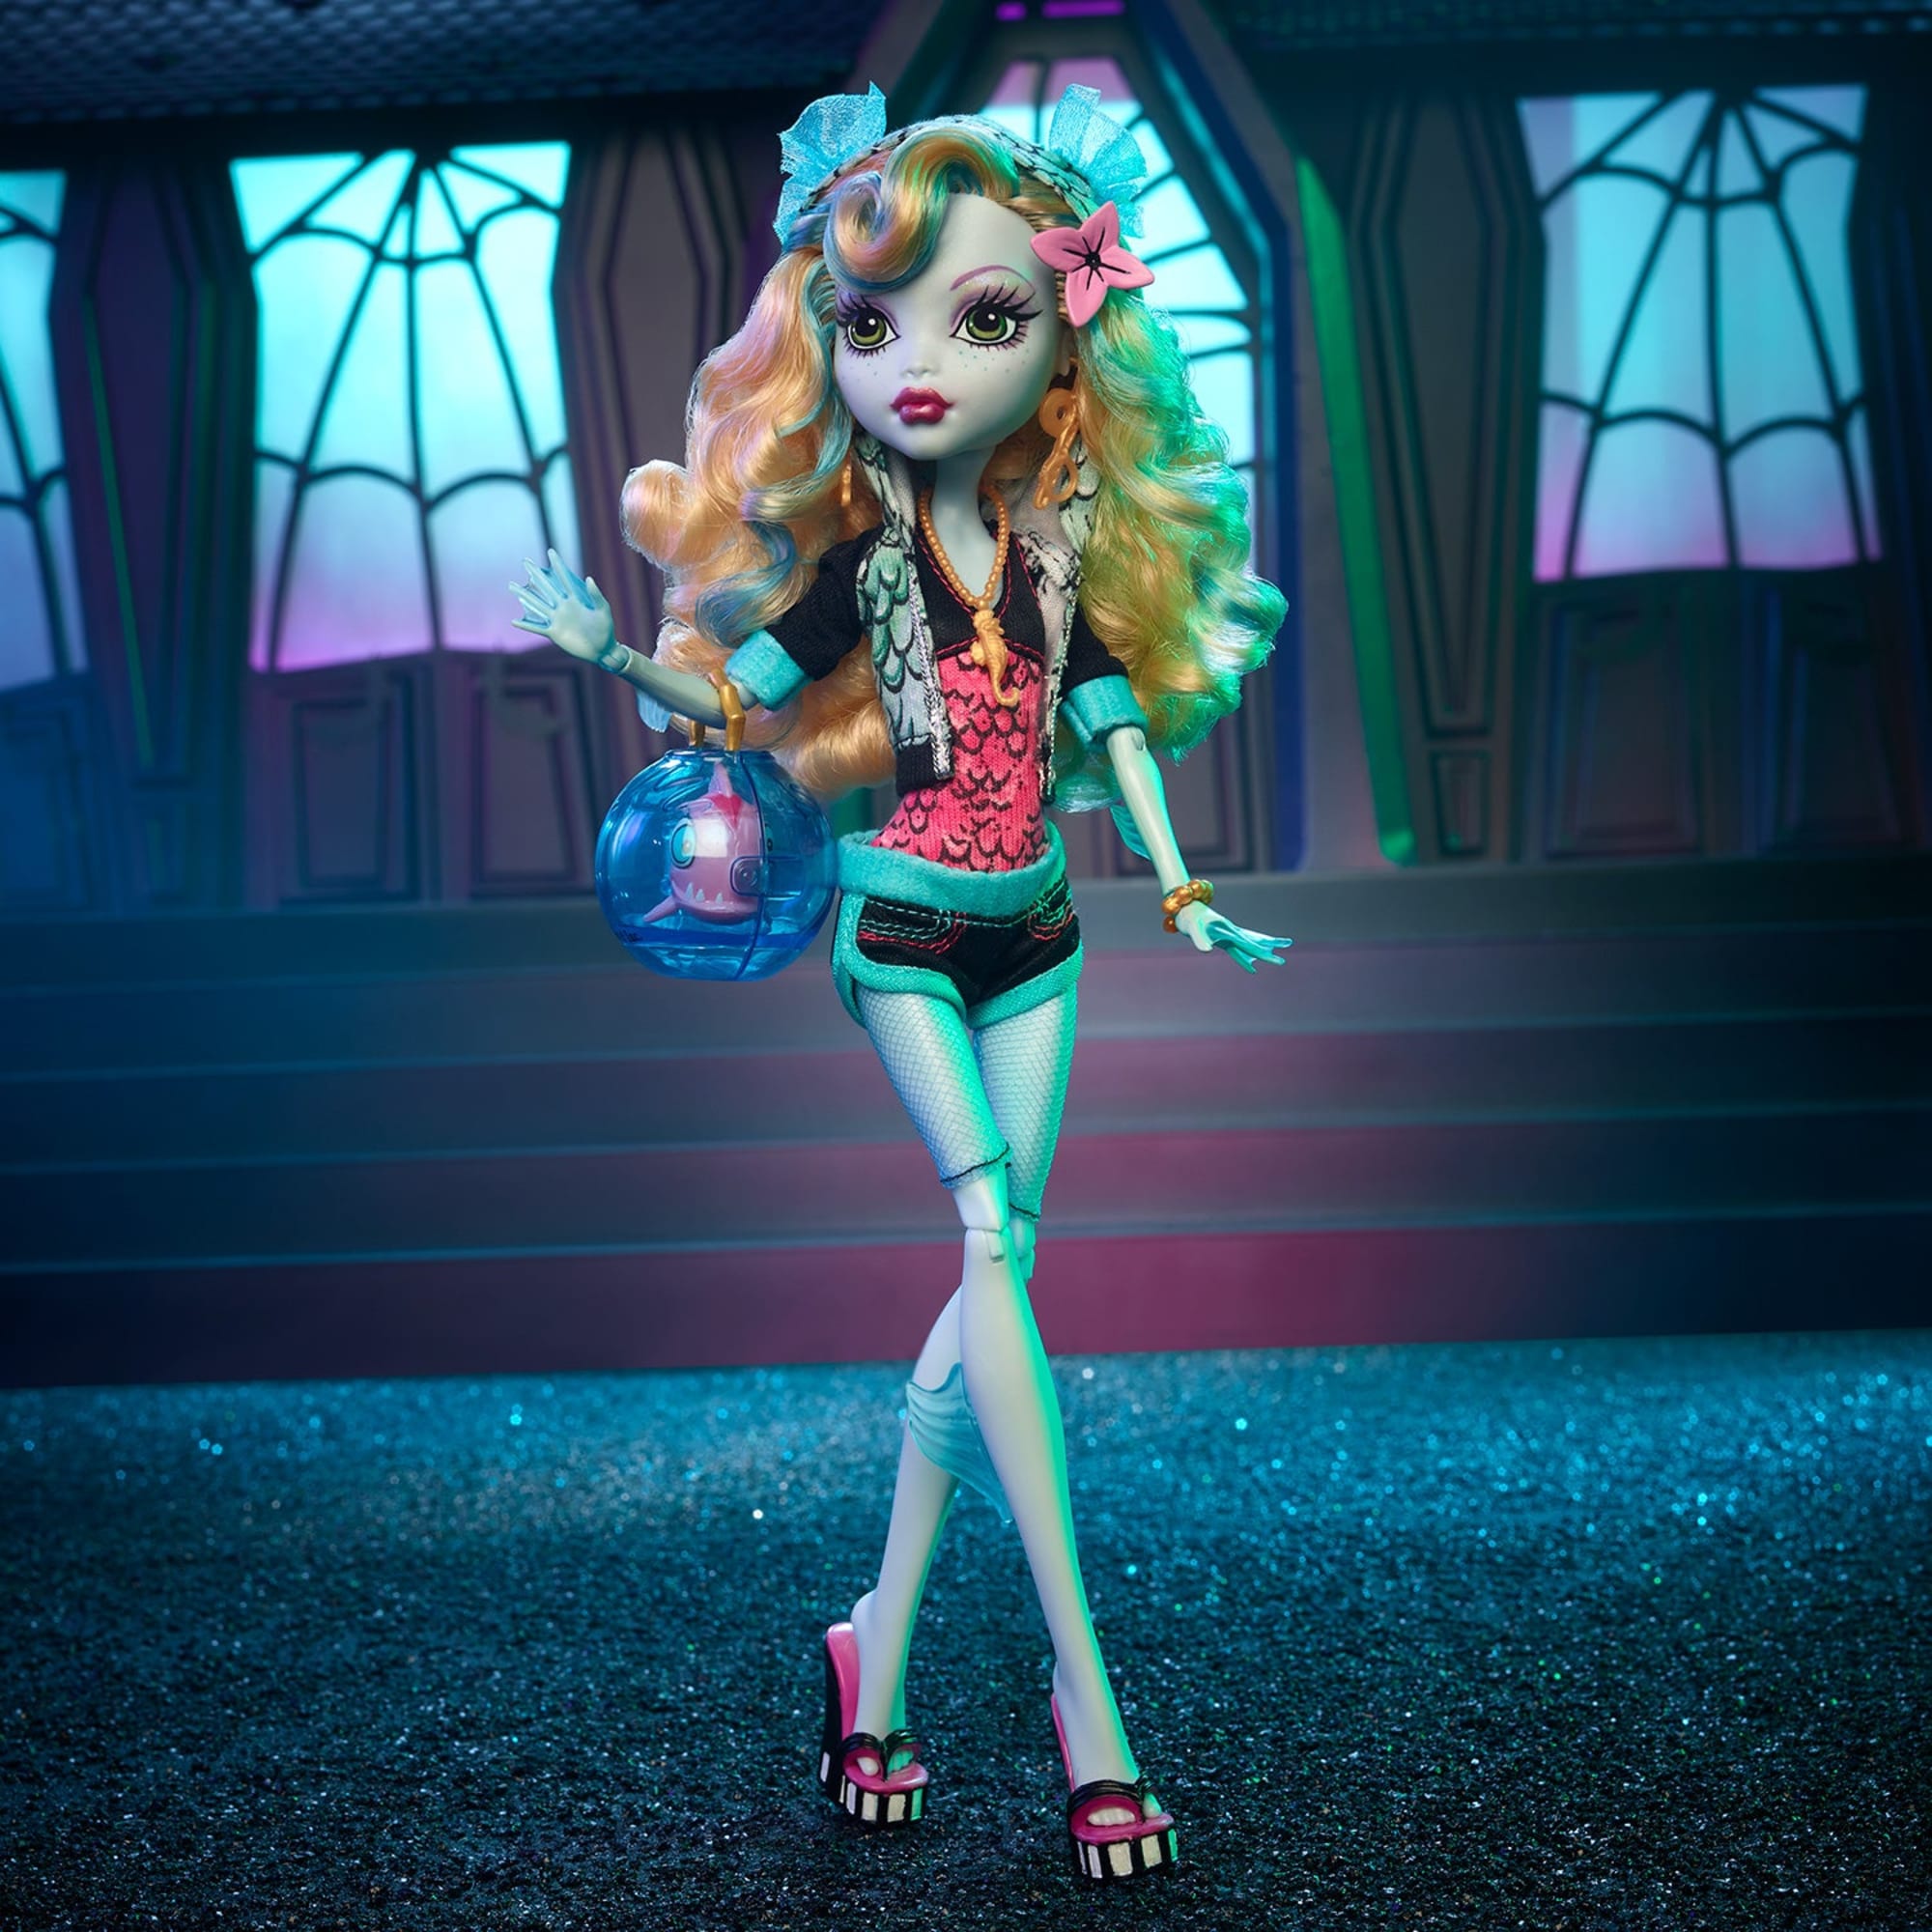 Monster High Lagoona Blue Doll 1st Wave